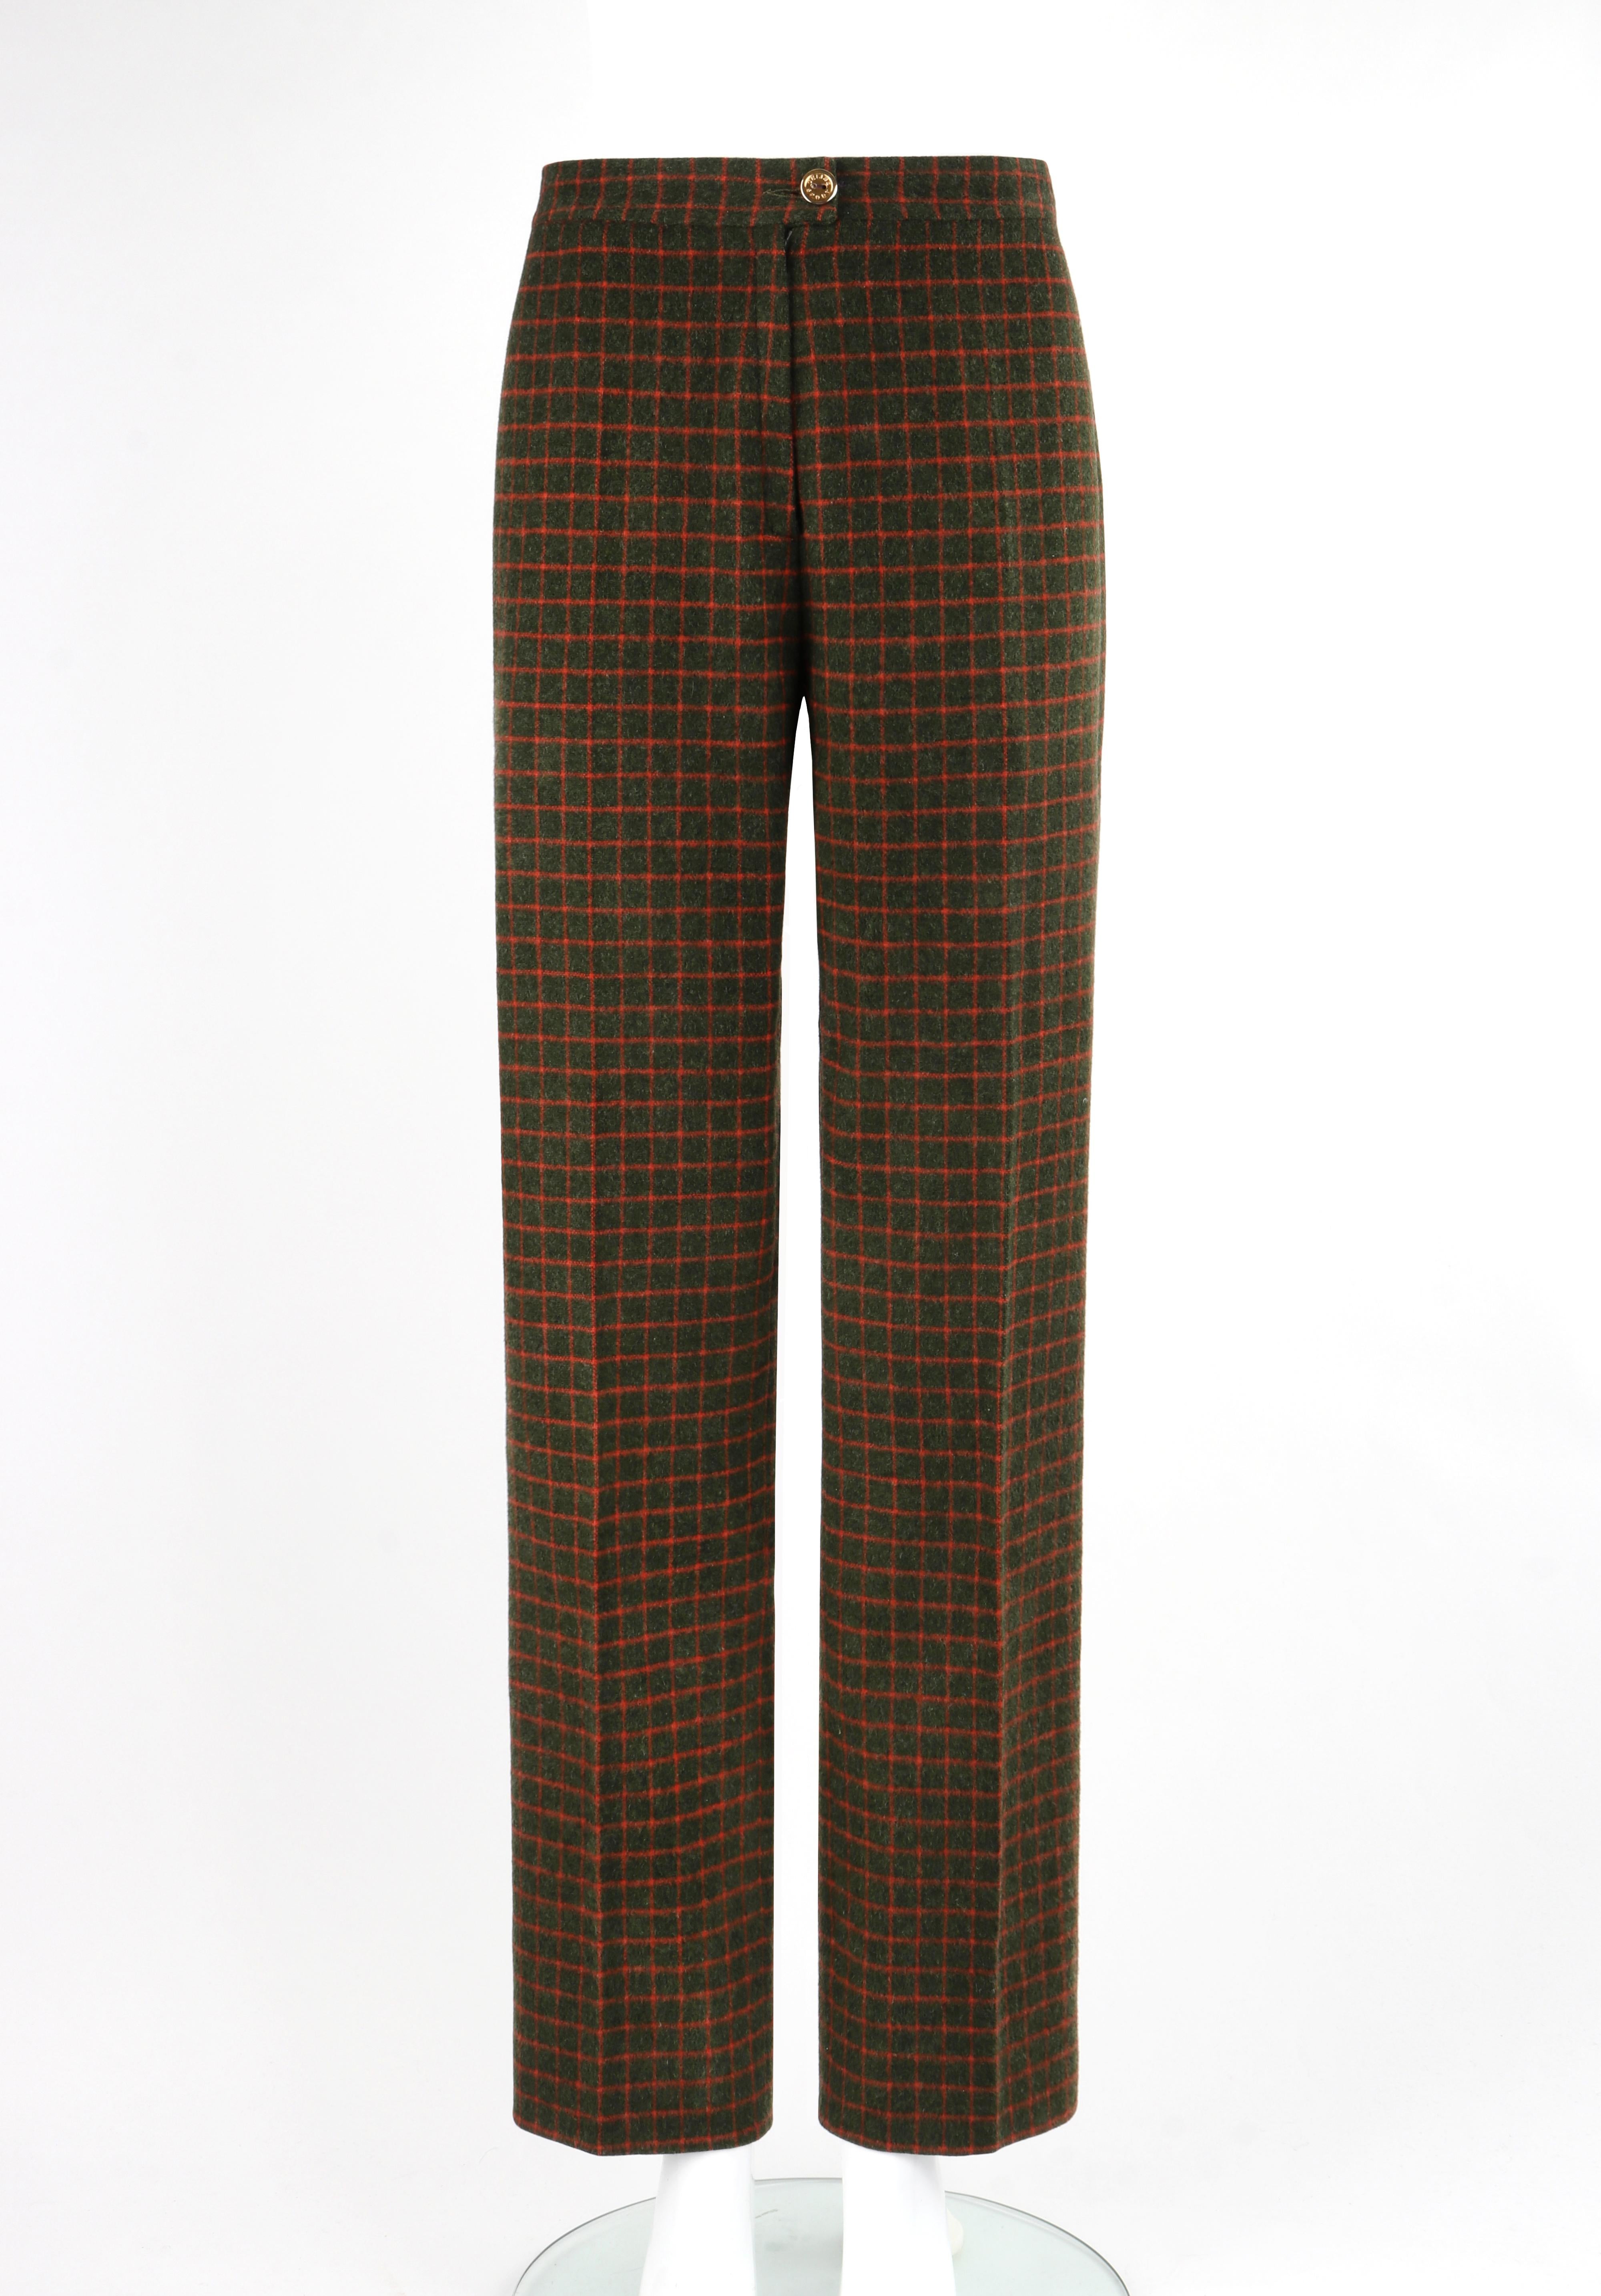 CELINE c.1990s Wool Check Pattern Green Red High Waist Tapered Trouser Pants

Brand / Manufacturer: Celine
Circa: 1990
Label(s): Original 